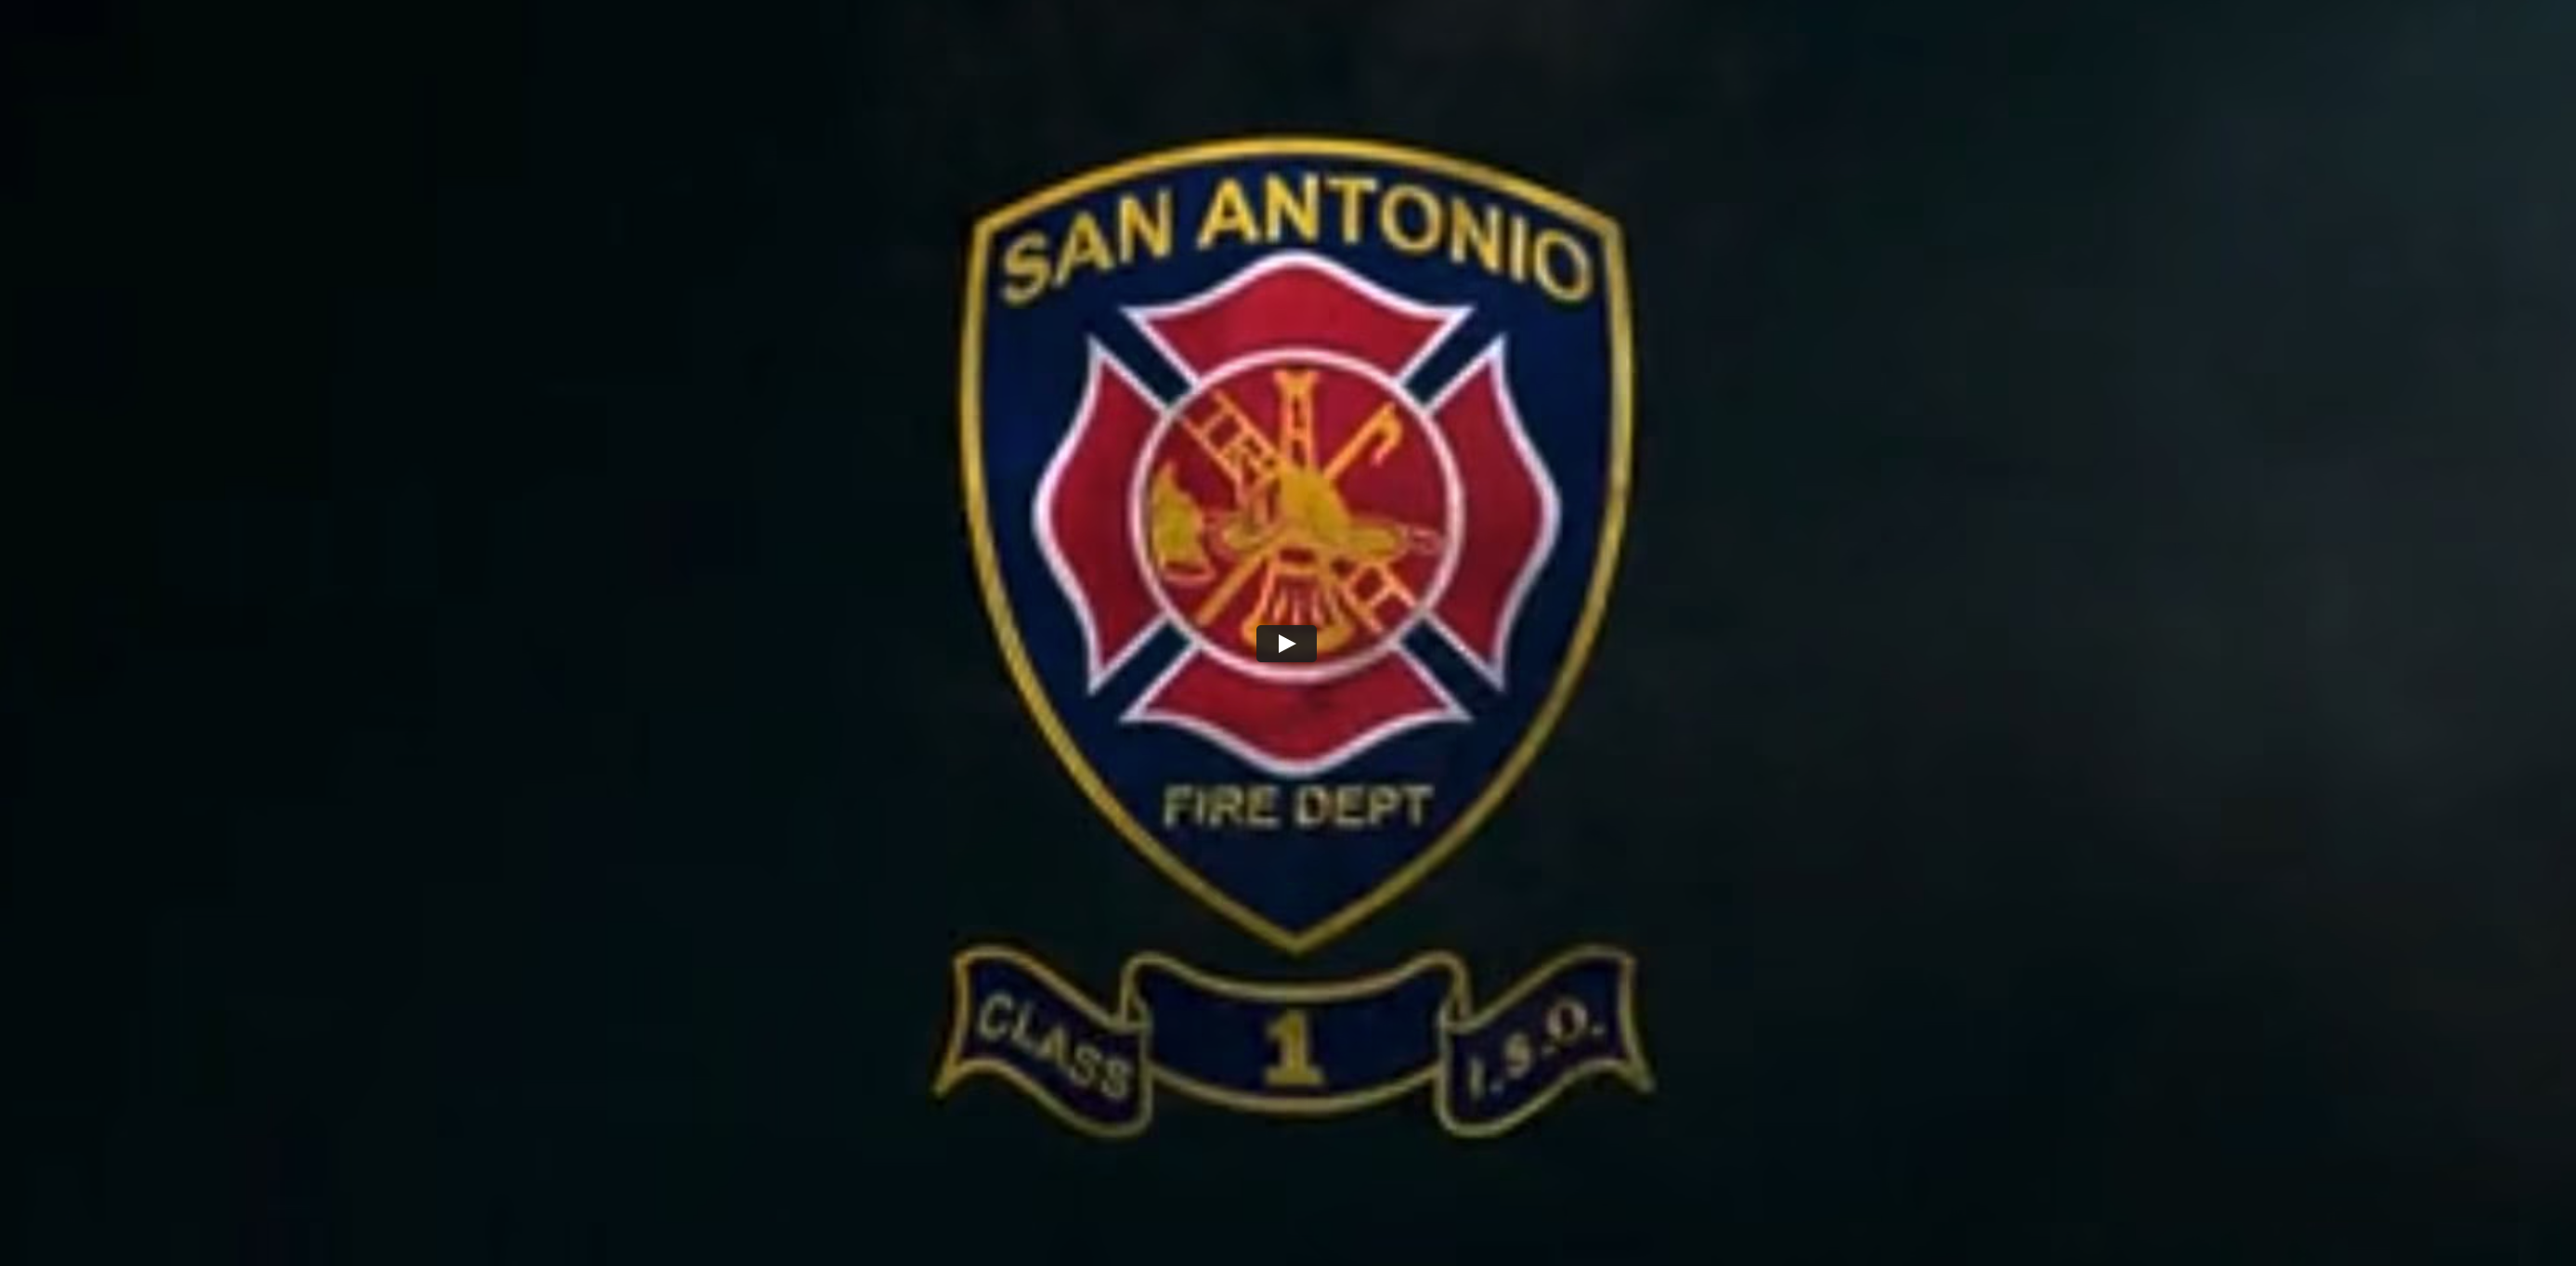 GoodSAM in San Antonio Fire Service